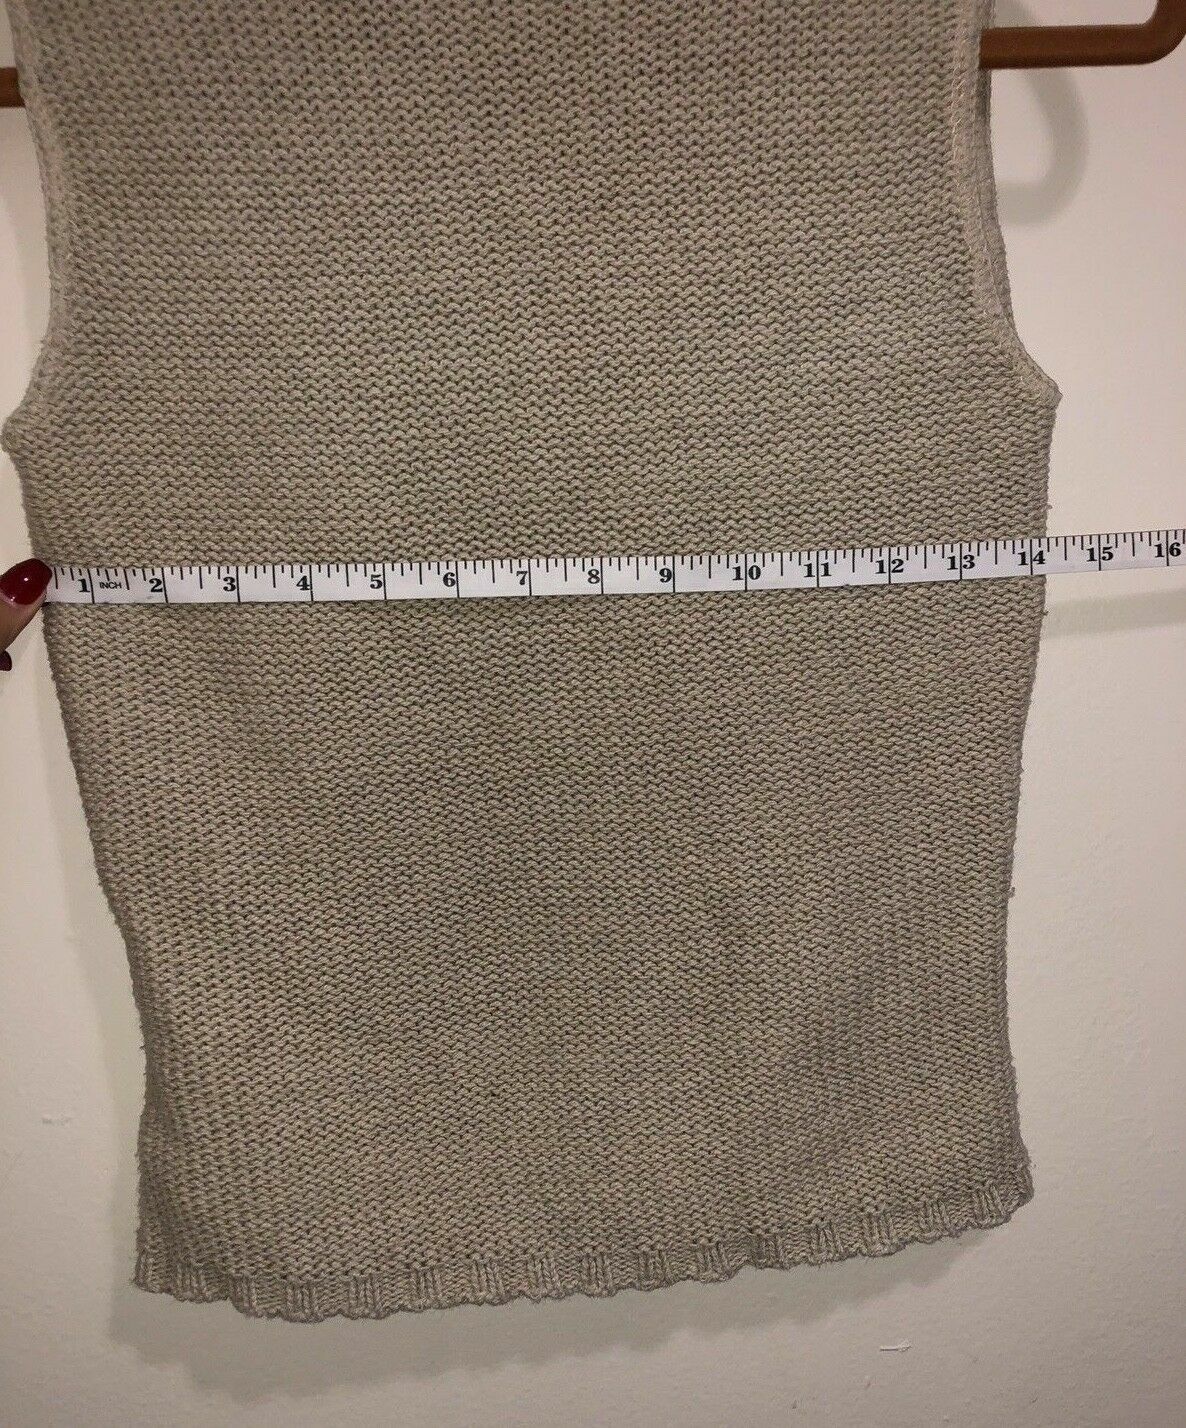 Beige Woman's Turtleneck Top Sleeveless Size Medium 100% Cotton | eBay